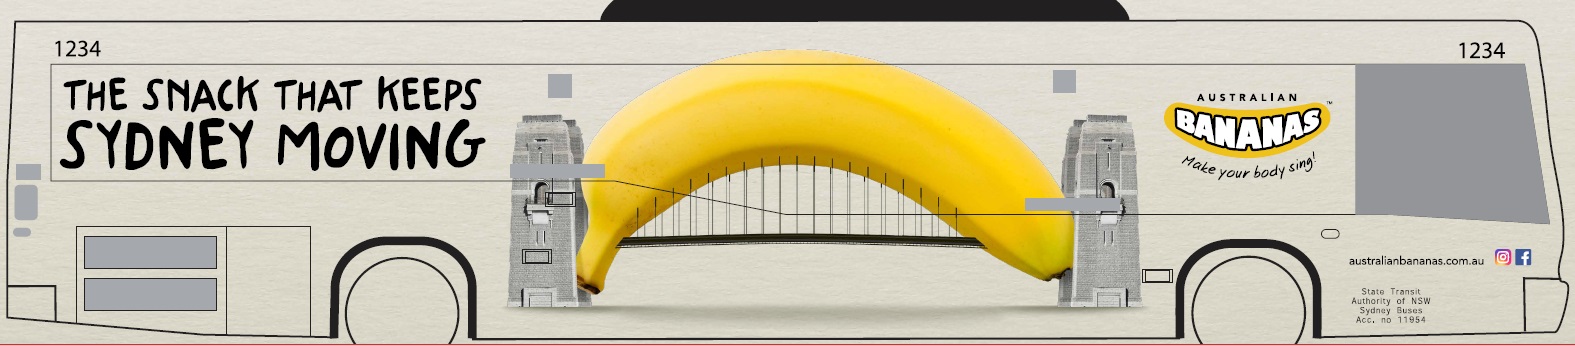 bananabus